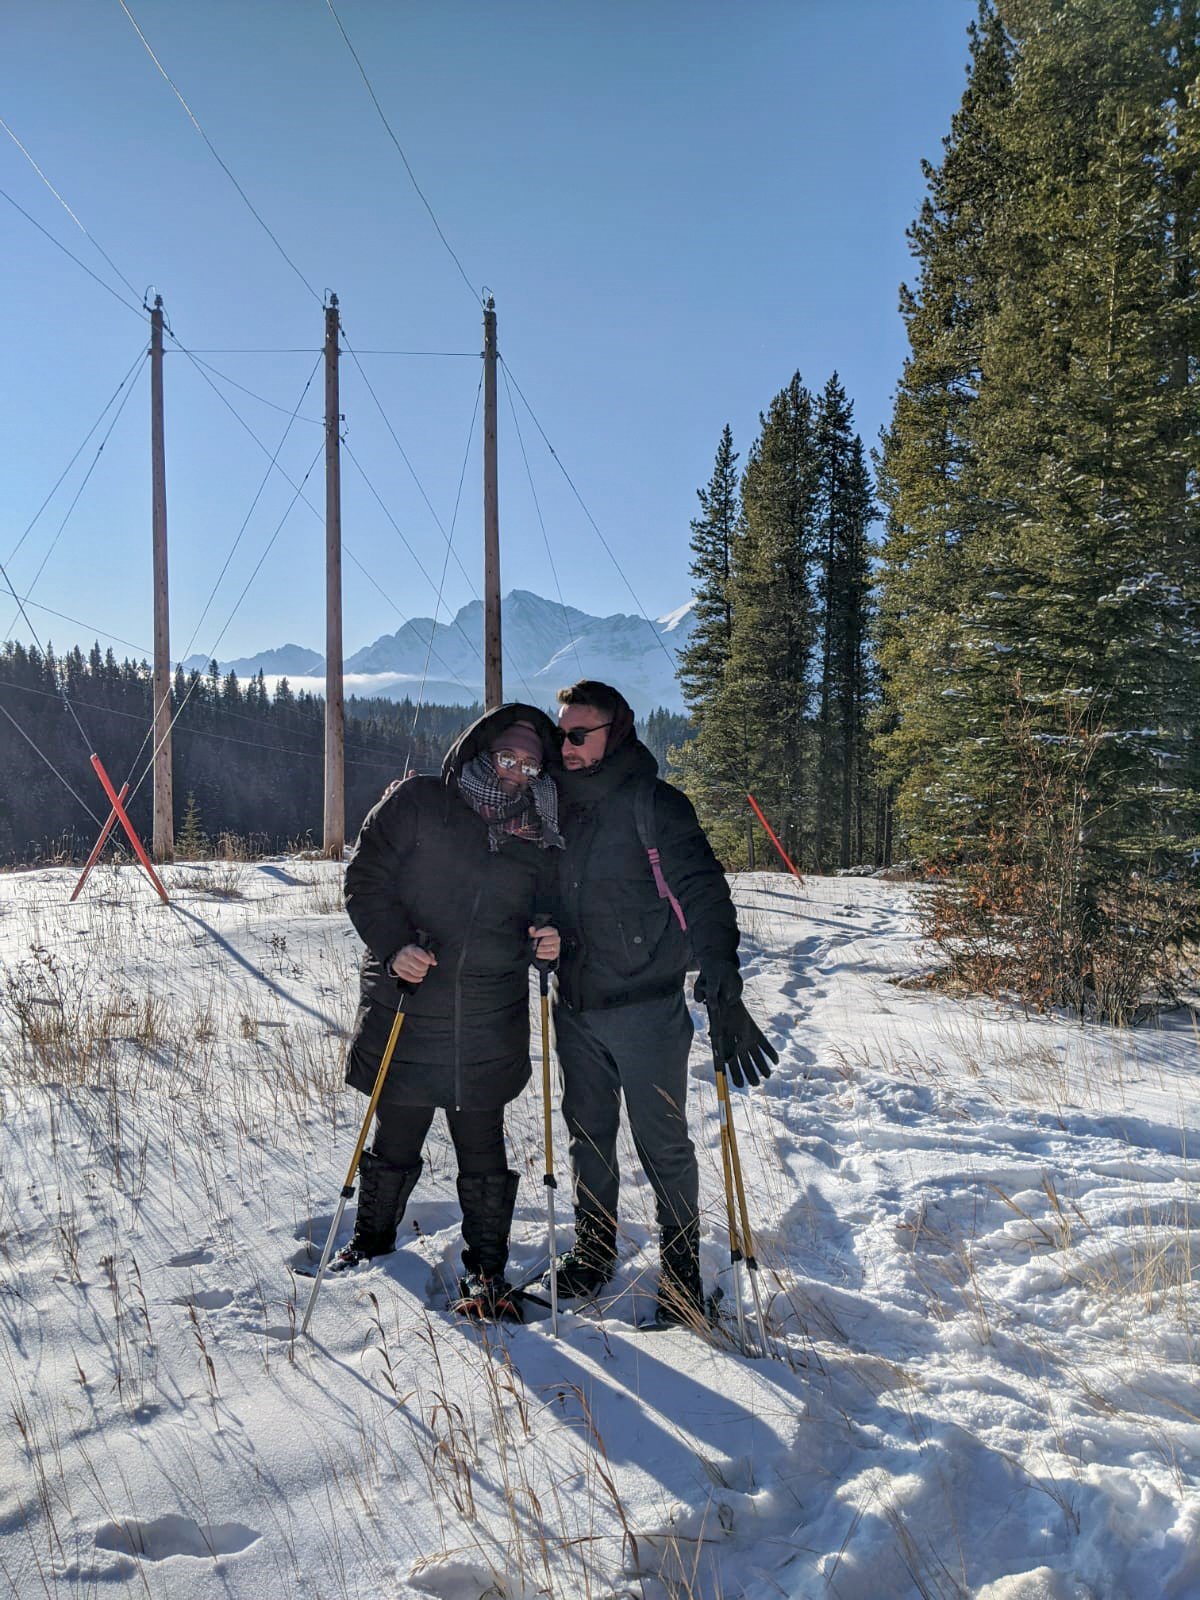 Mike and his wife Yax-Xul visiting relatives, enjoying some snowshoeing, Kananaskis, Alberta, December 2019.